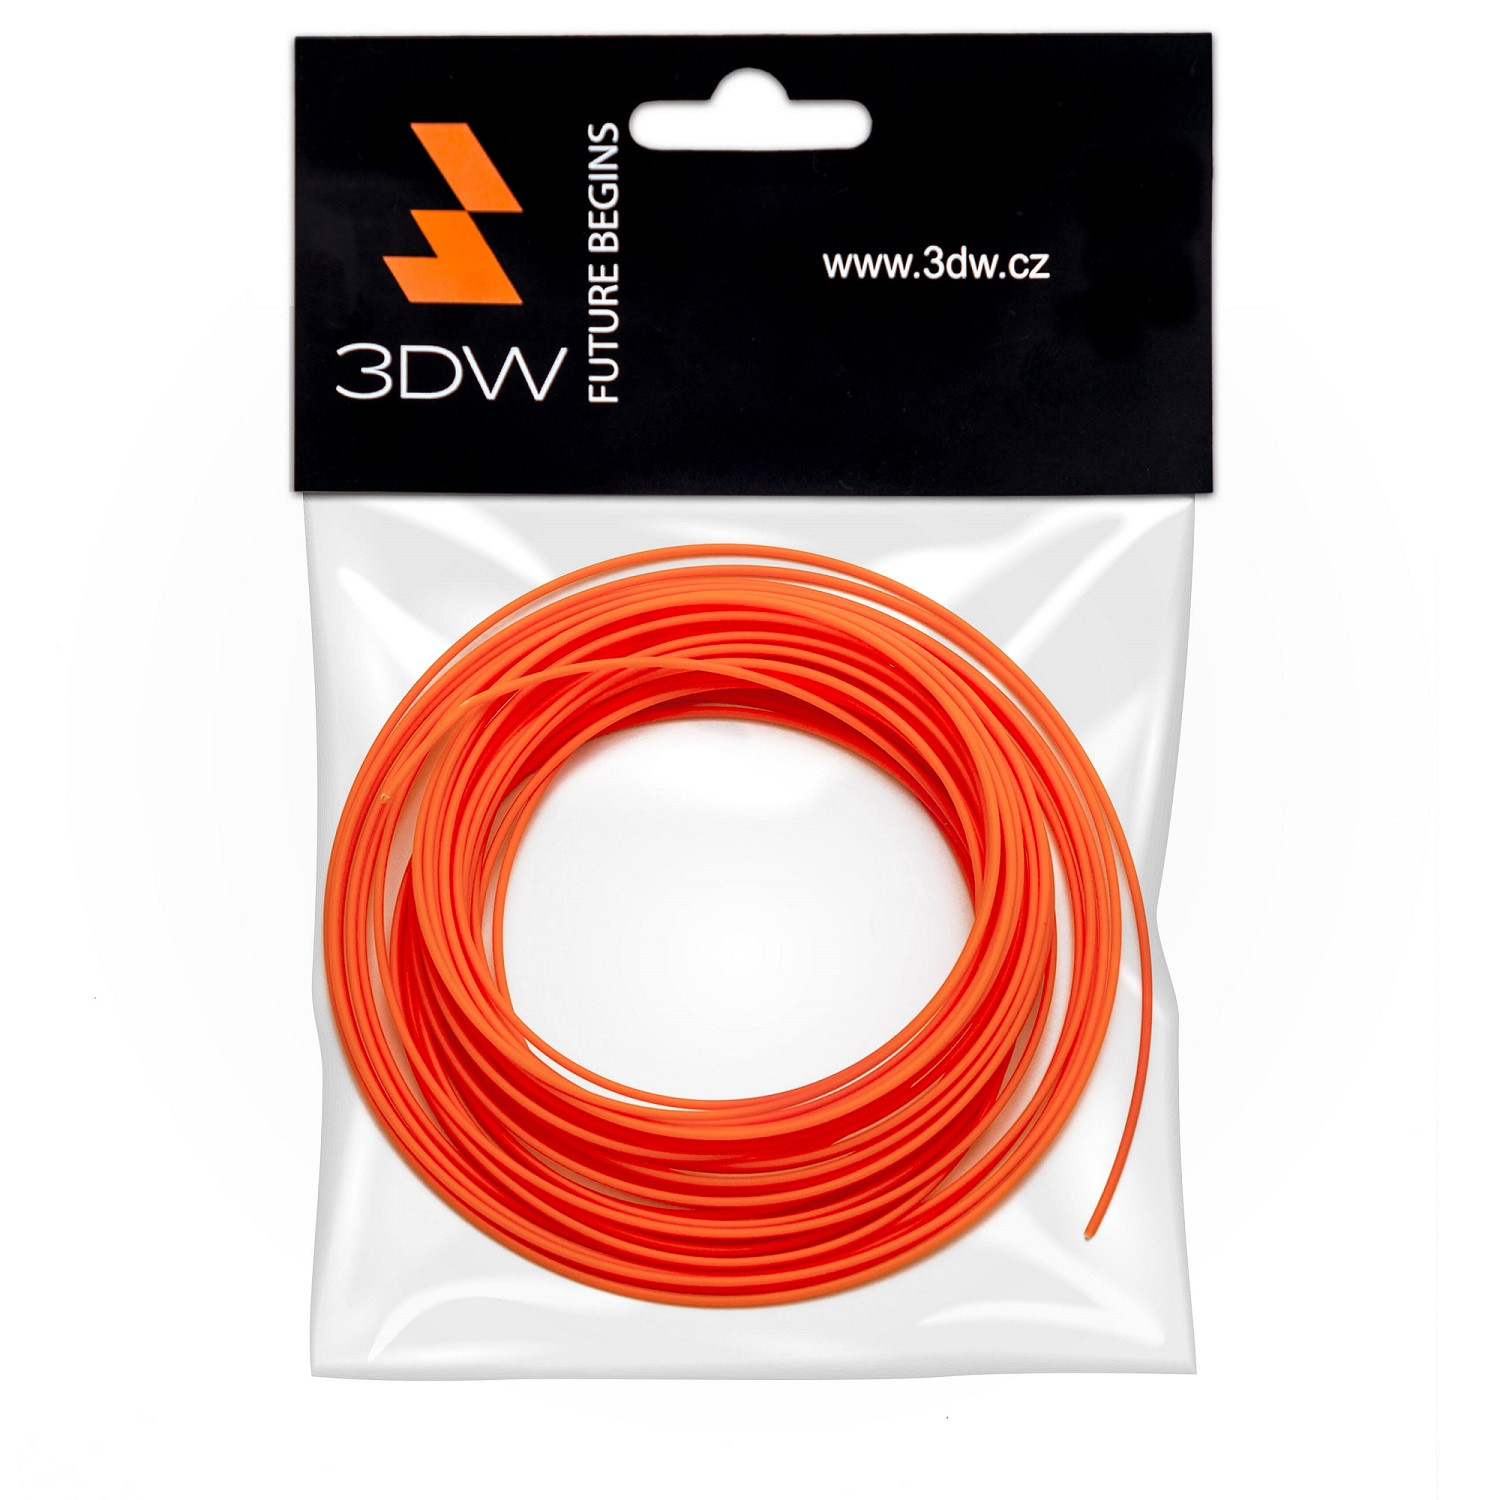 Levně 3DW - ABS filament 1,75mm oranžová, 10m, tisk 220-250°C